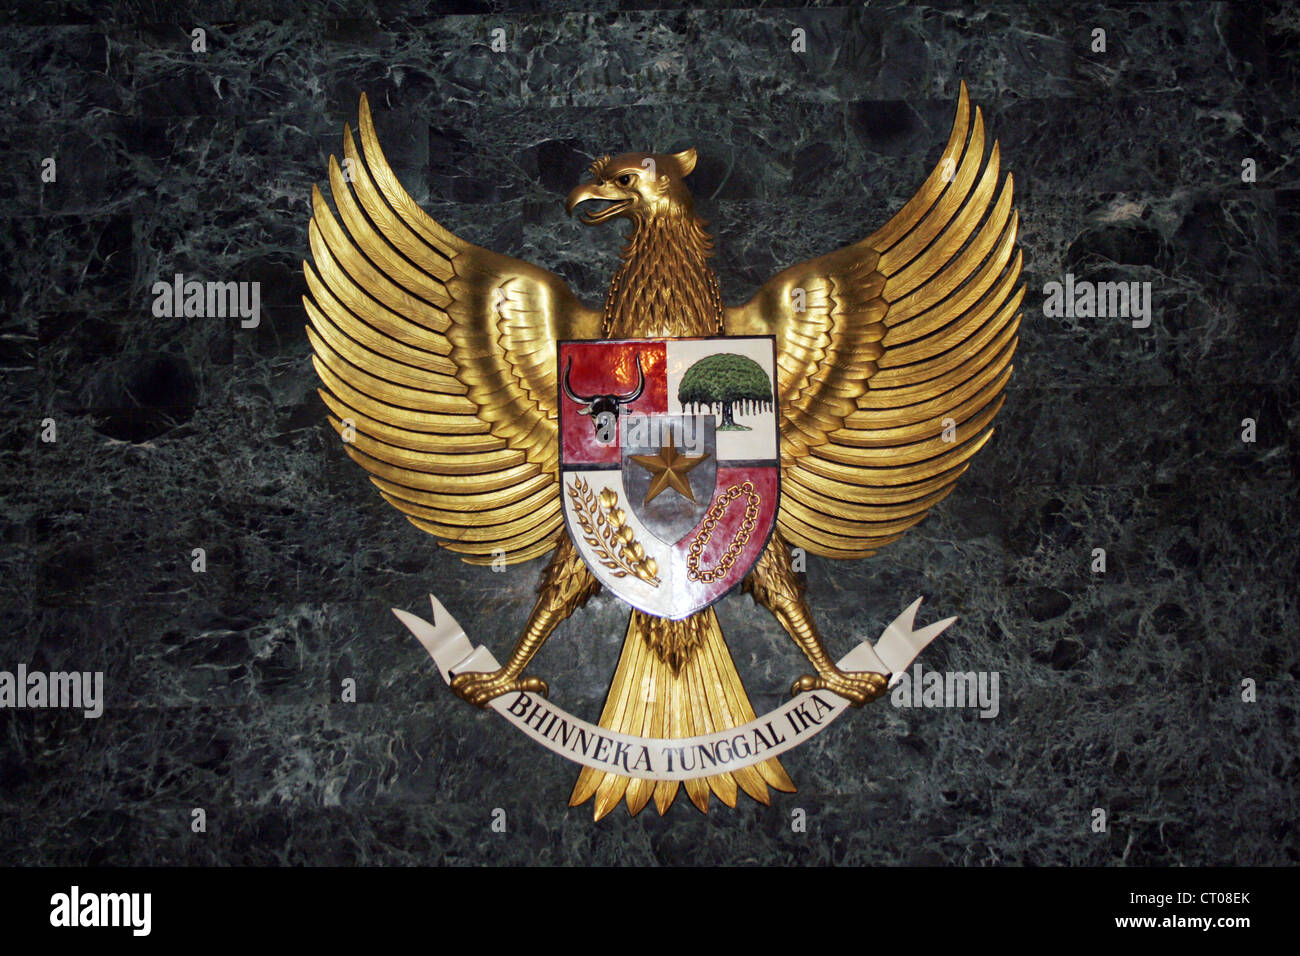 The statue of Garuda Pancasila, displayed at Ruang Kemerdekaan (Independence Room) in National Monument (Monas), Jakarta. Stock Photo